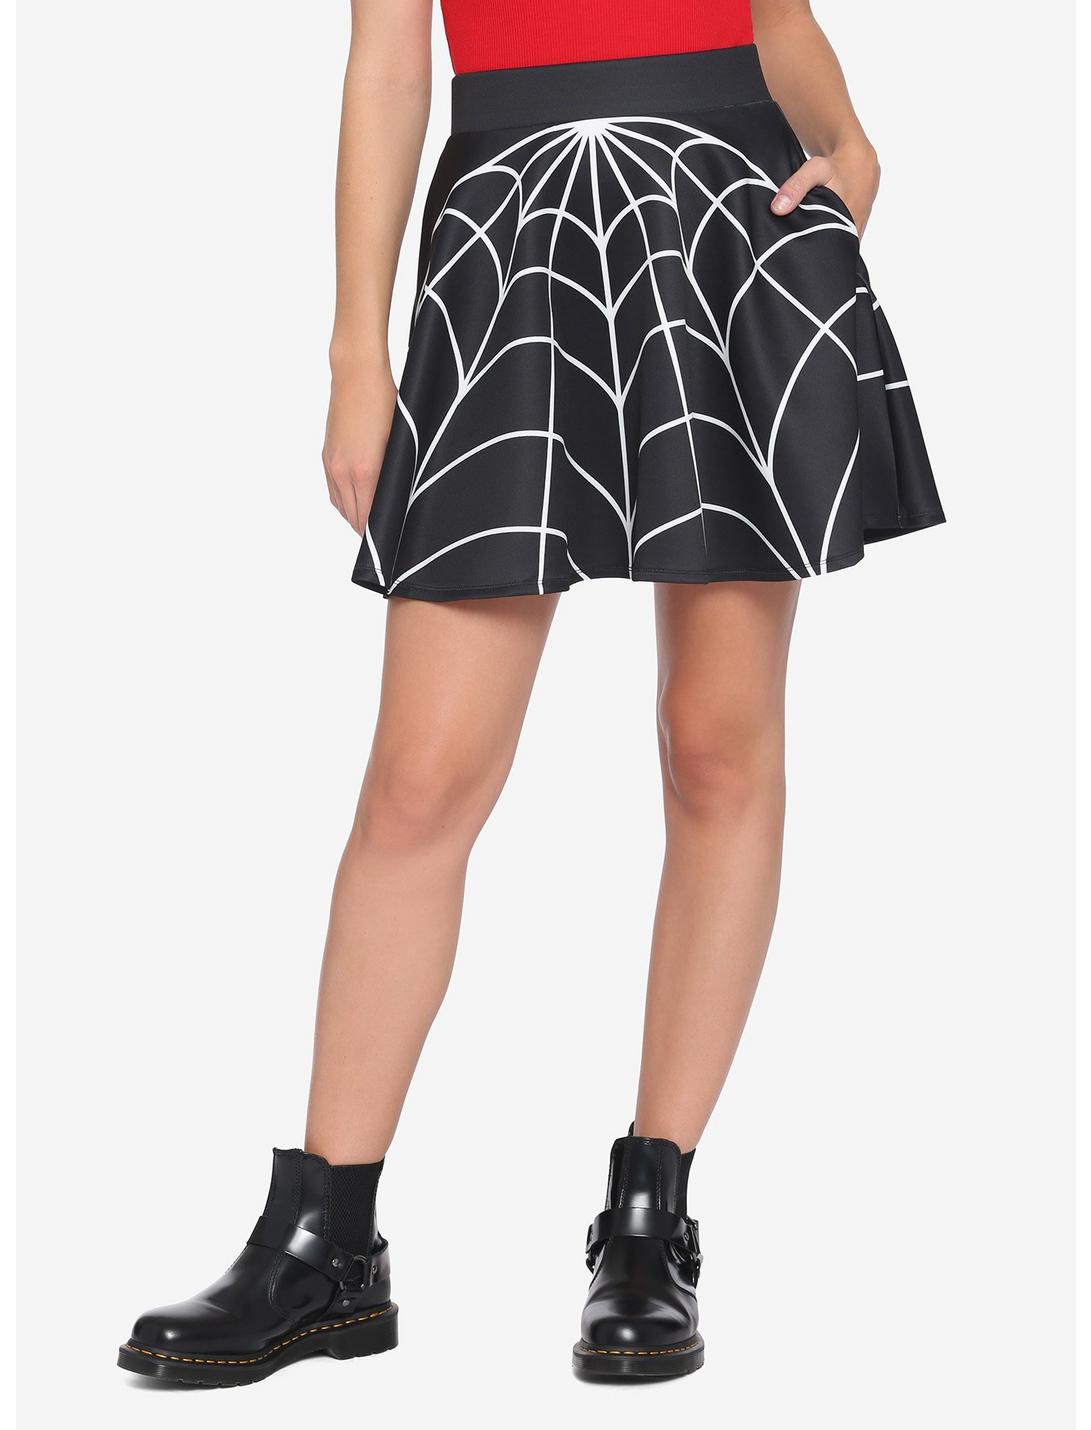 Spiderweb Skirt, BLACK, hi-res